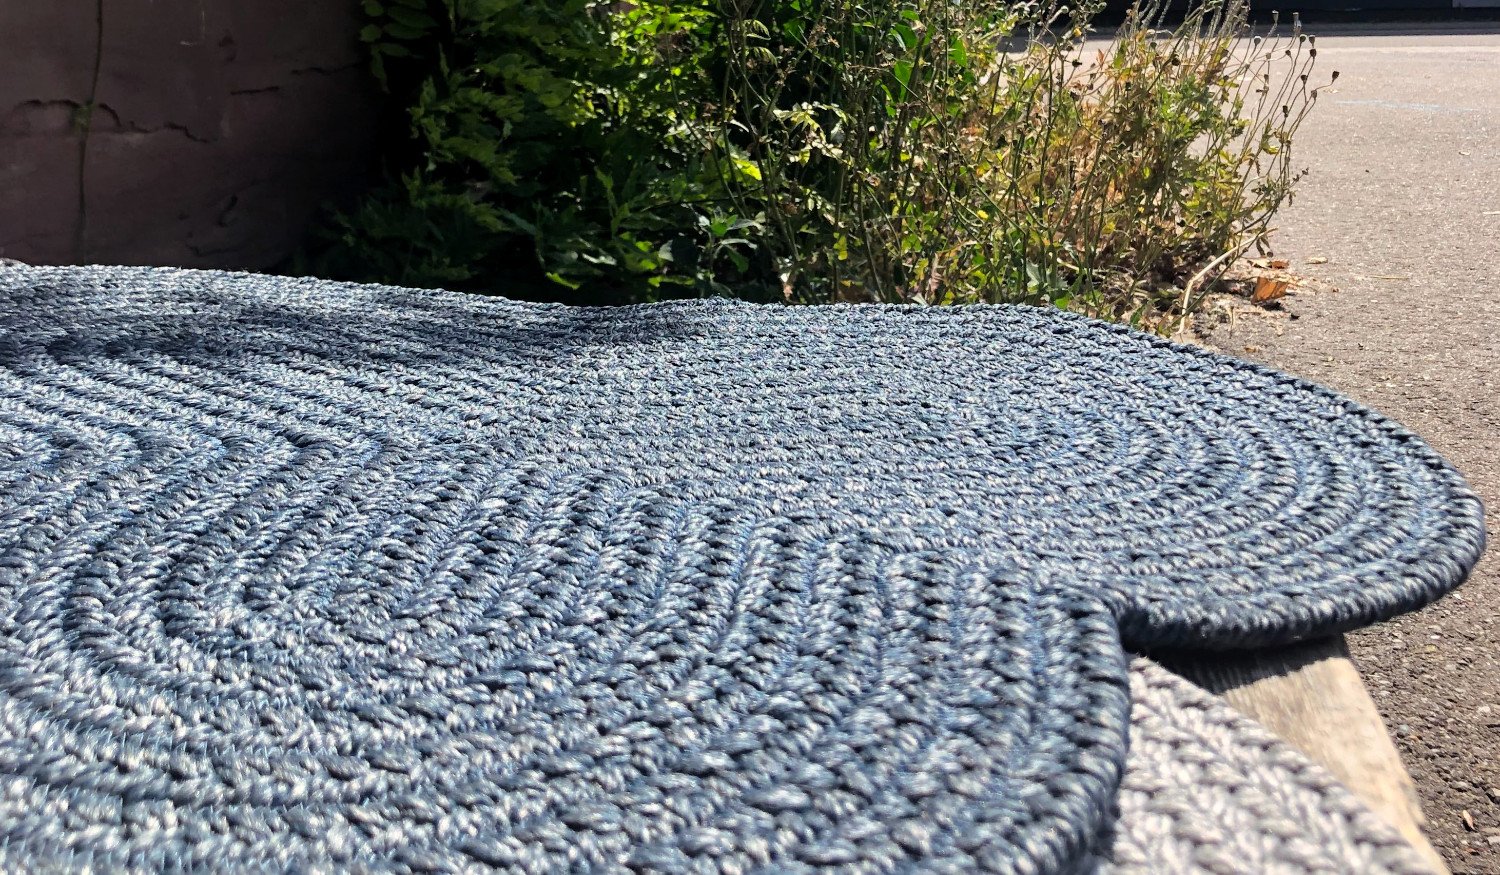 waterrepellant braided organically shaped outdoor designer rug